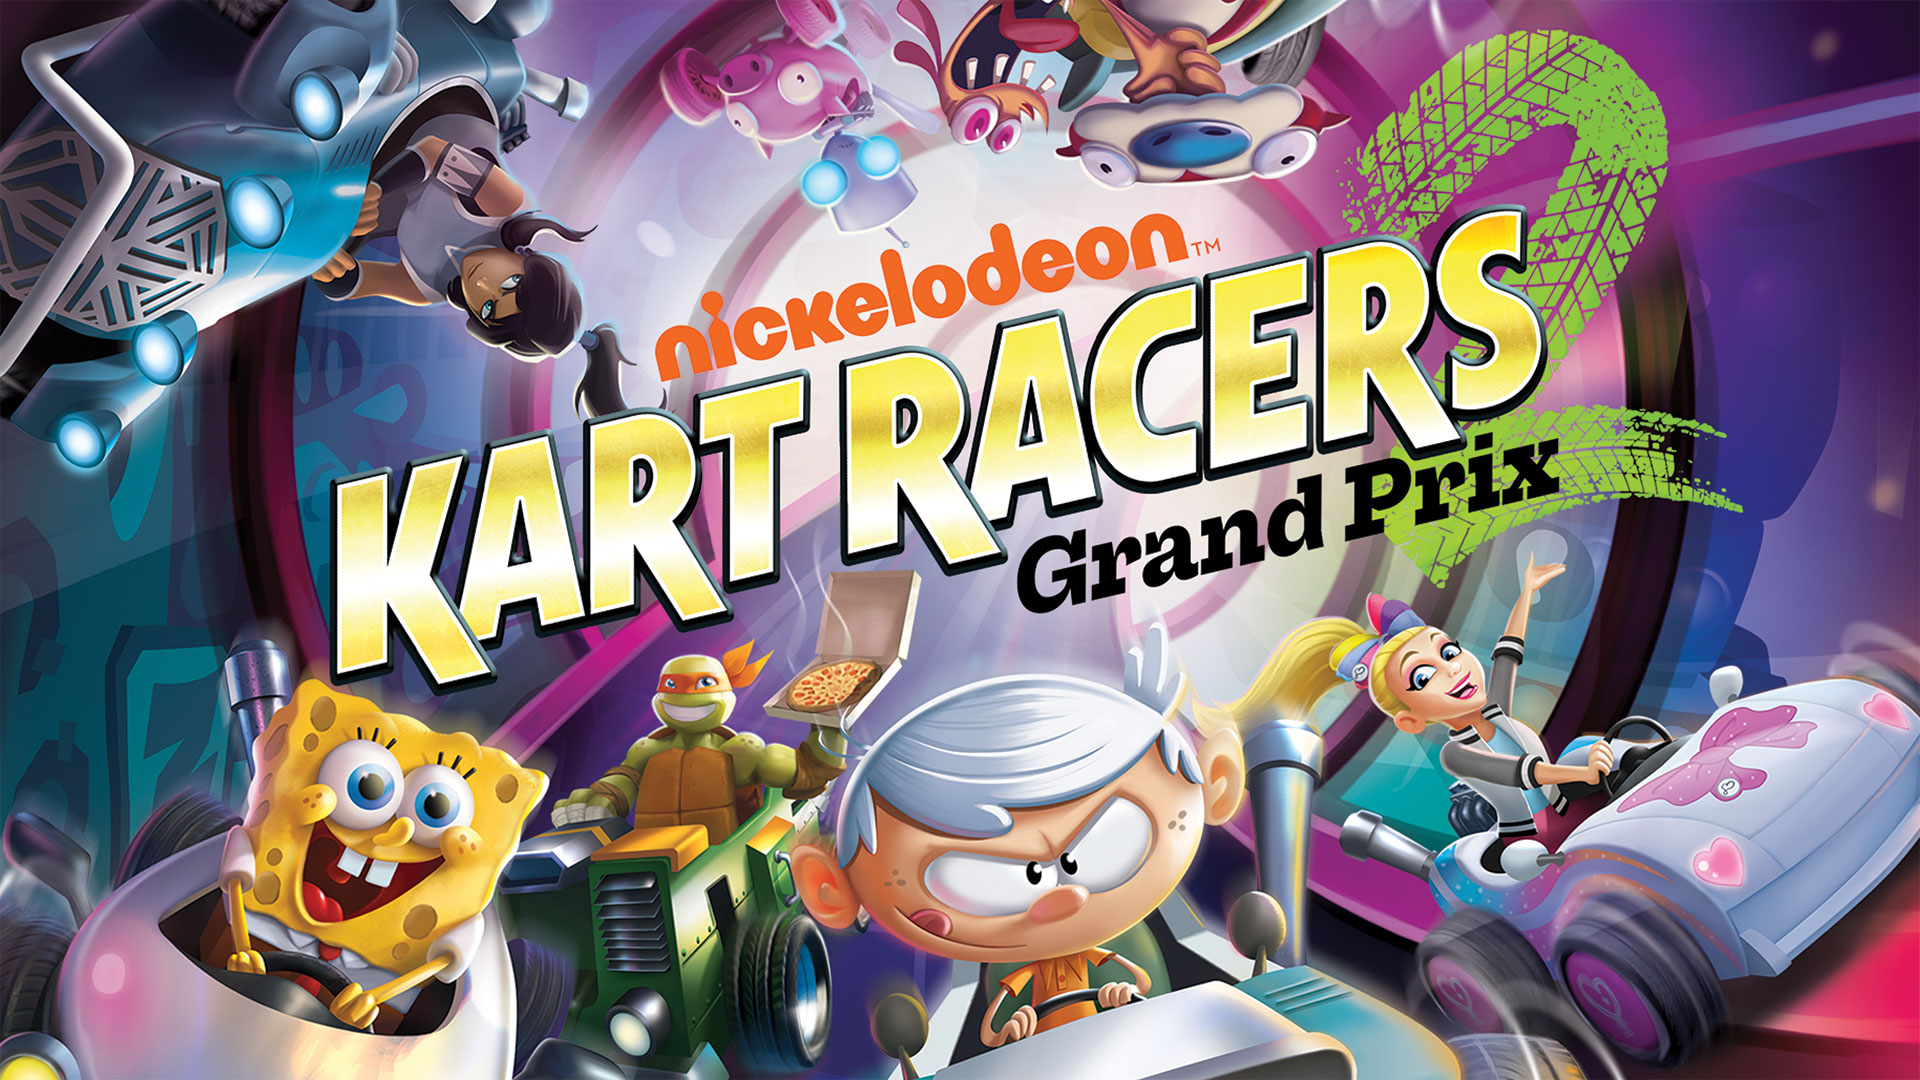 download nickelodeon kart racers 1 for free